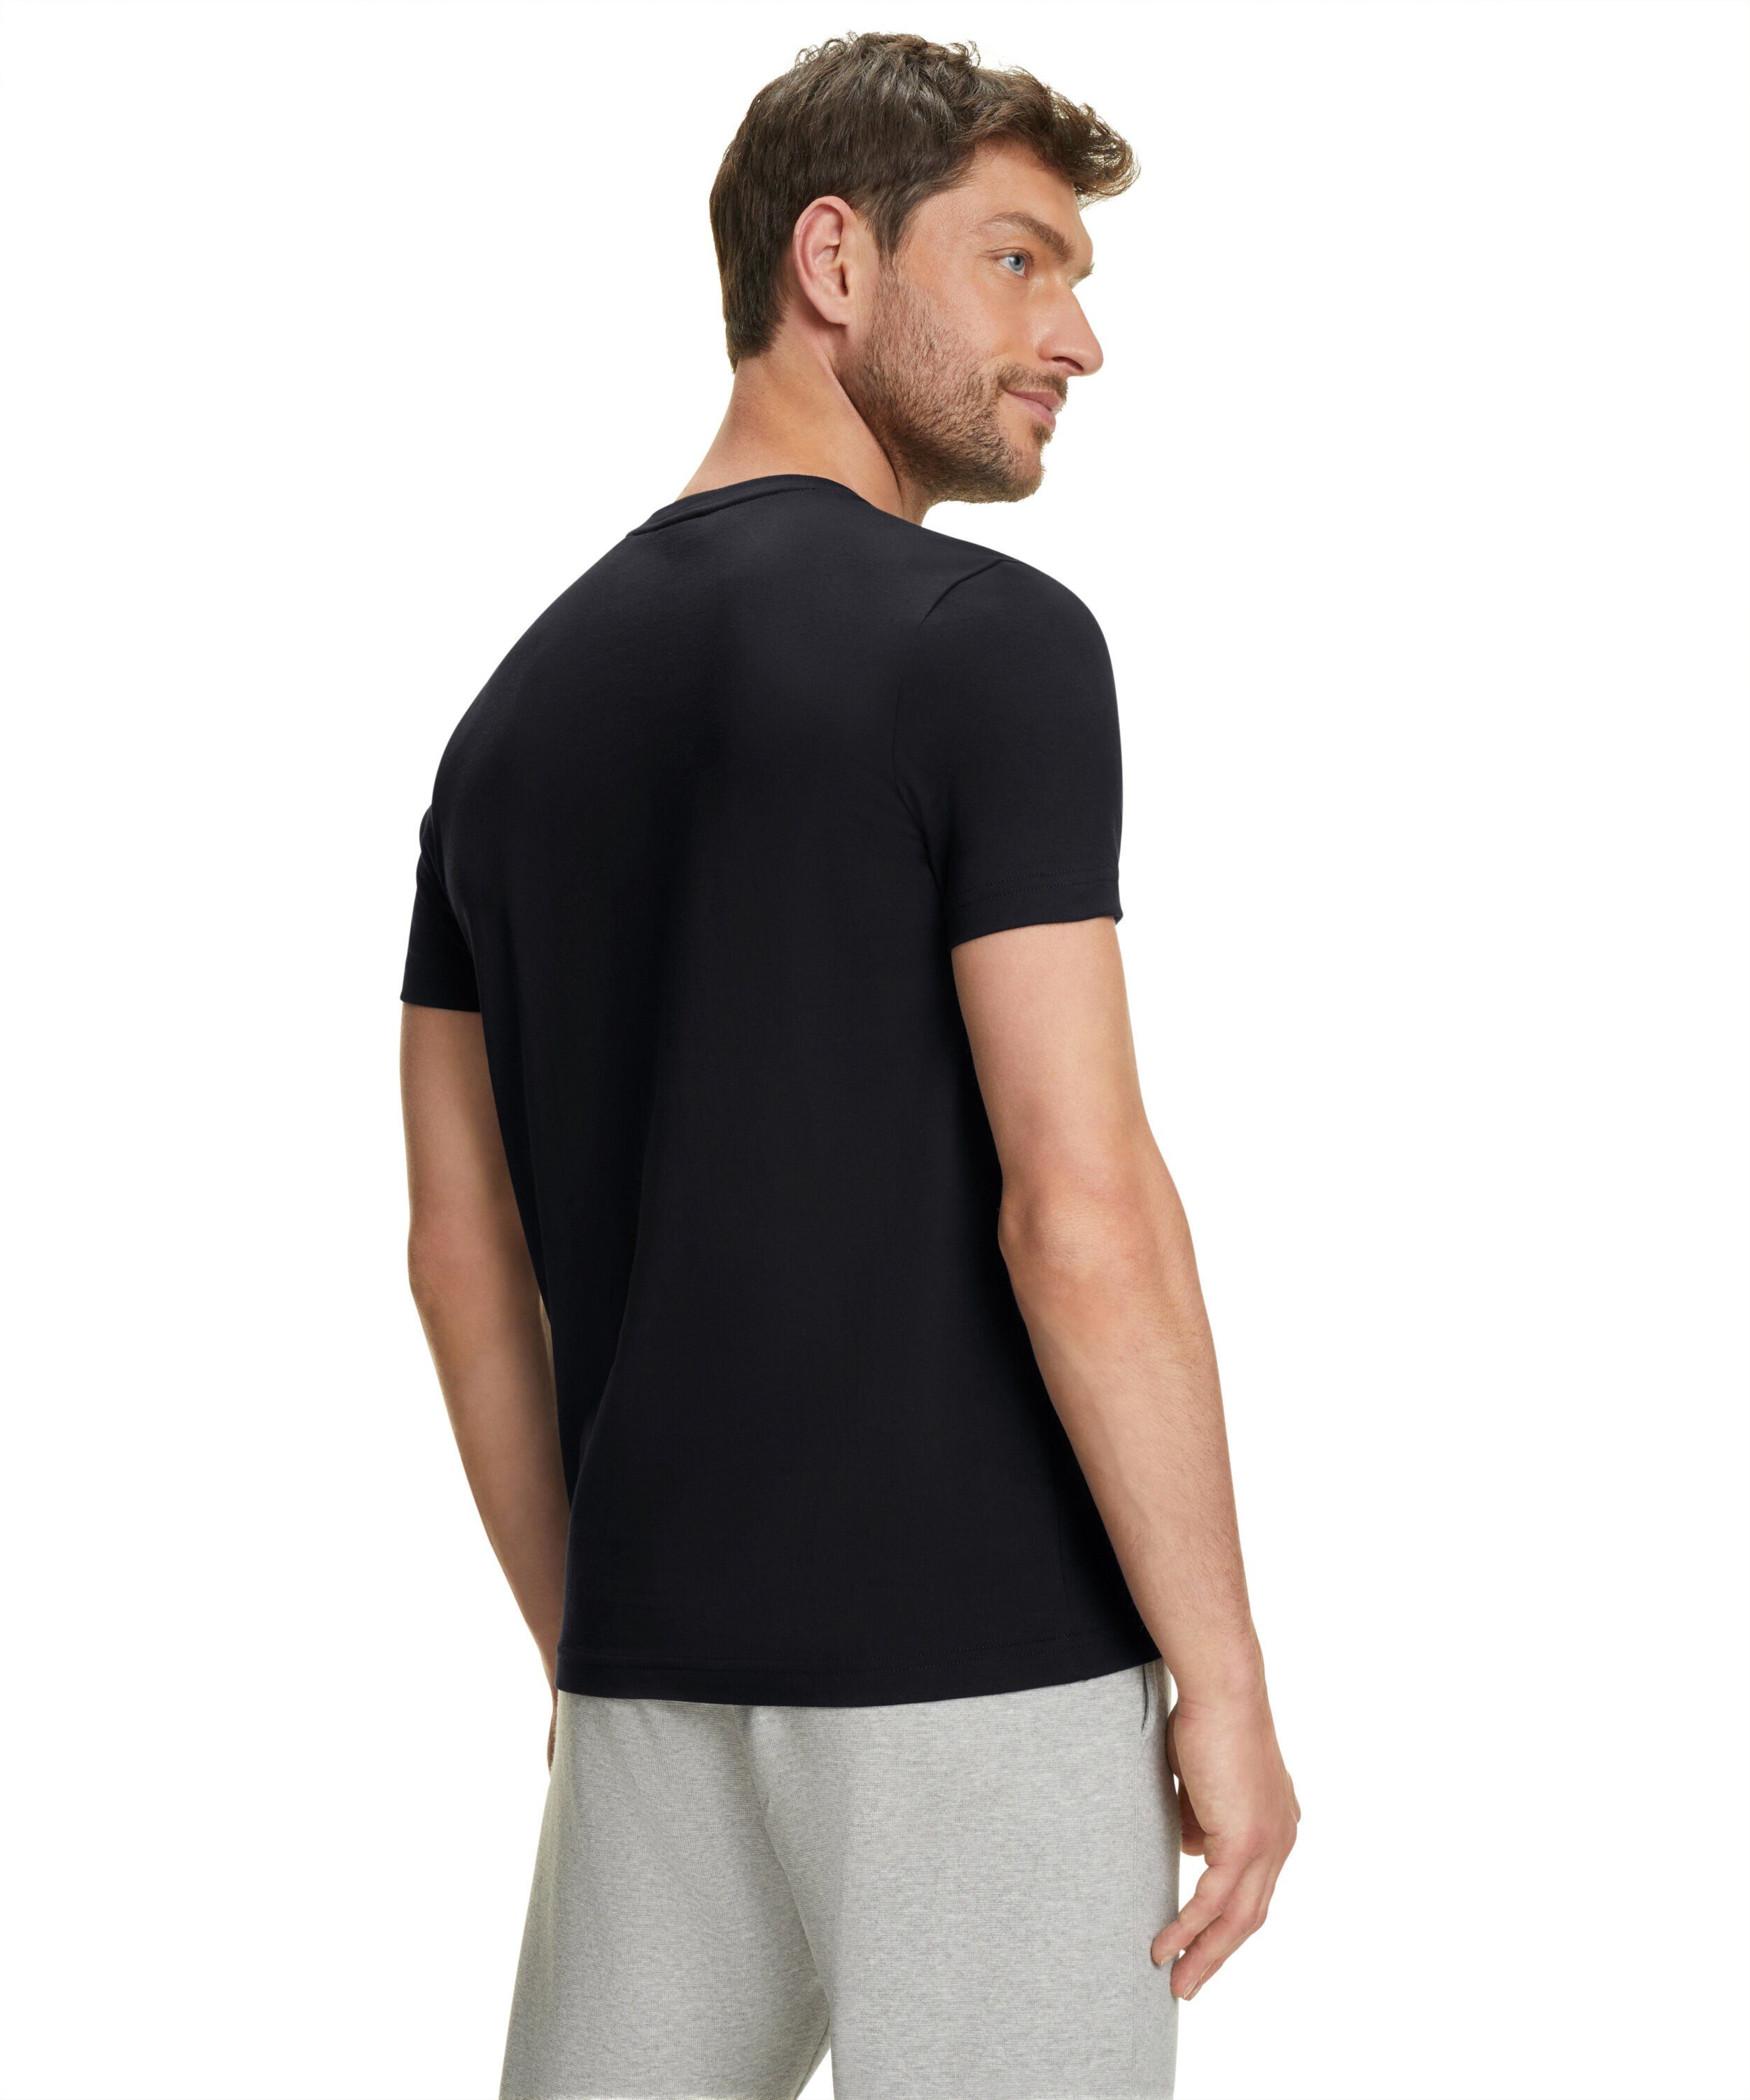 aus black T-Shirt (1-tlg) FALKE hochwertiger Pima-Baumwolle (3000)